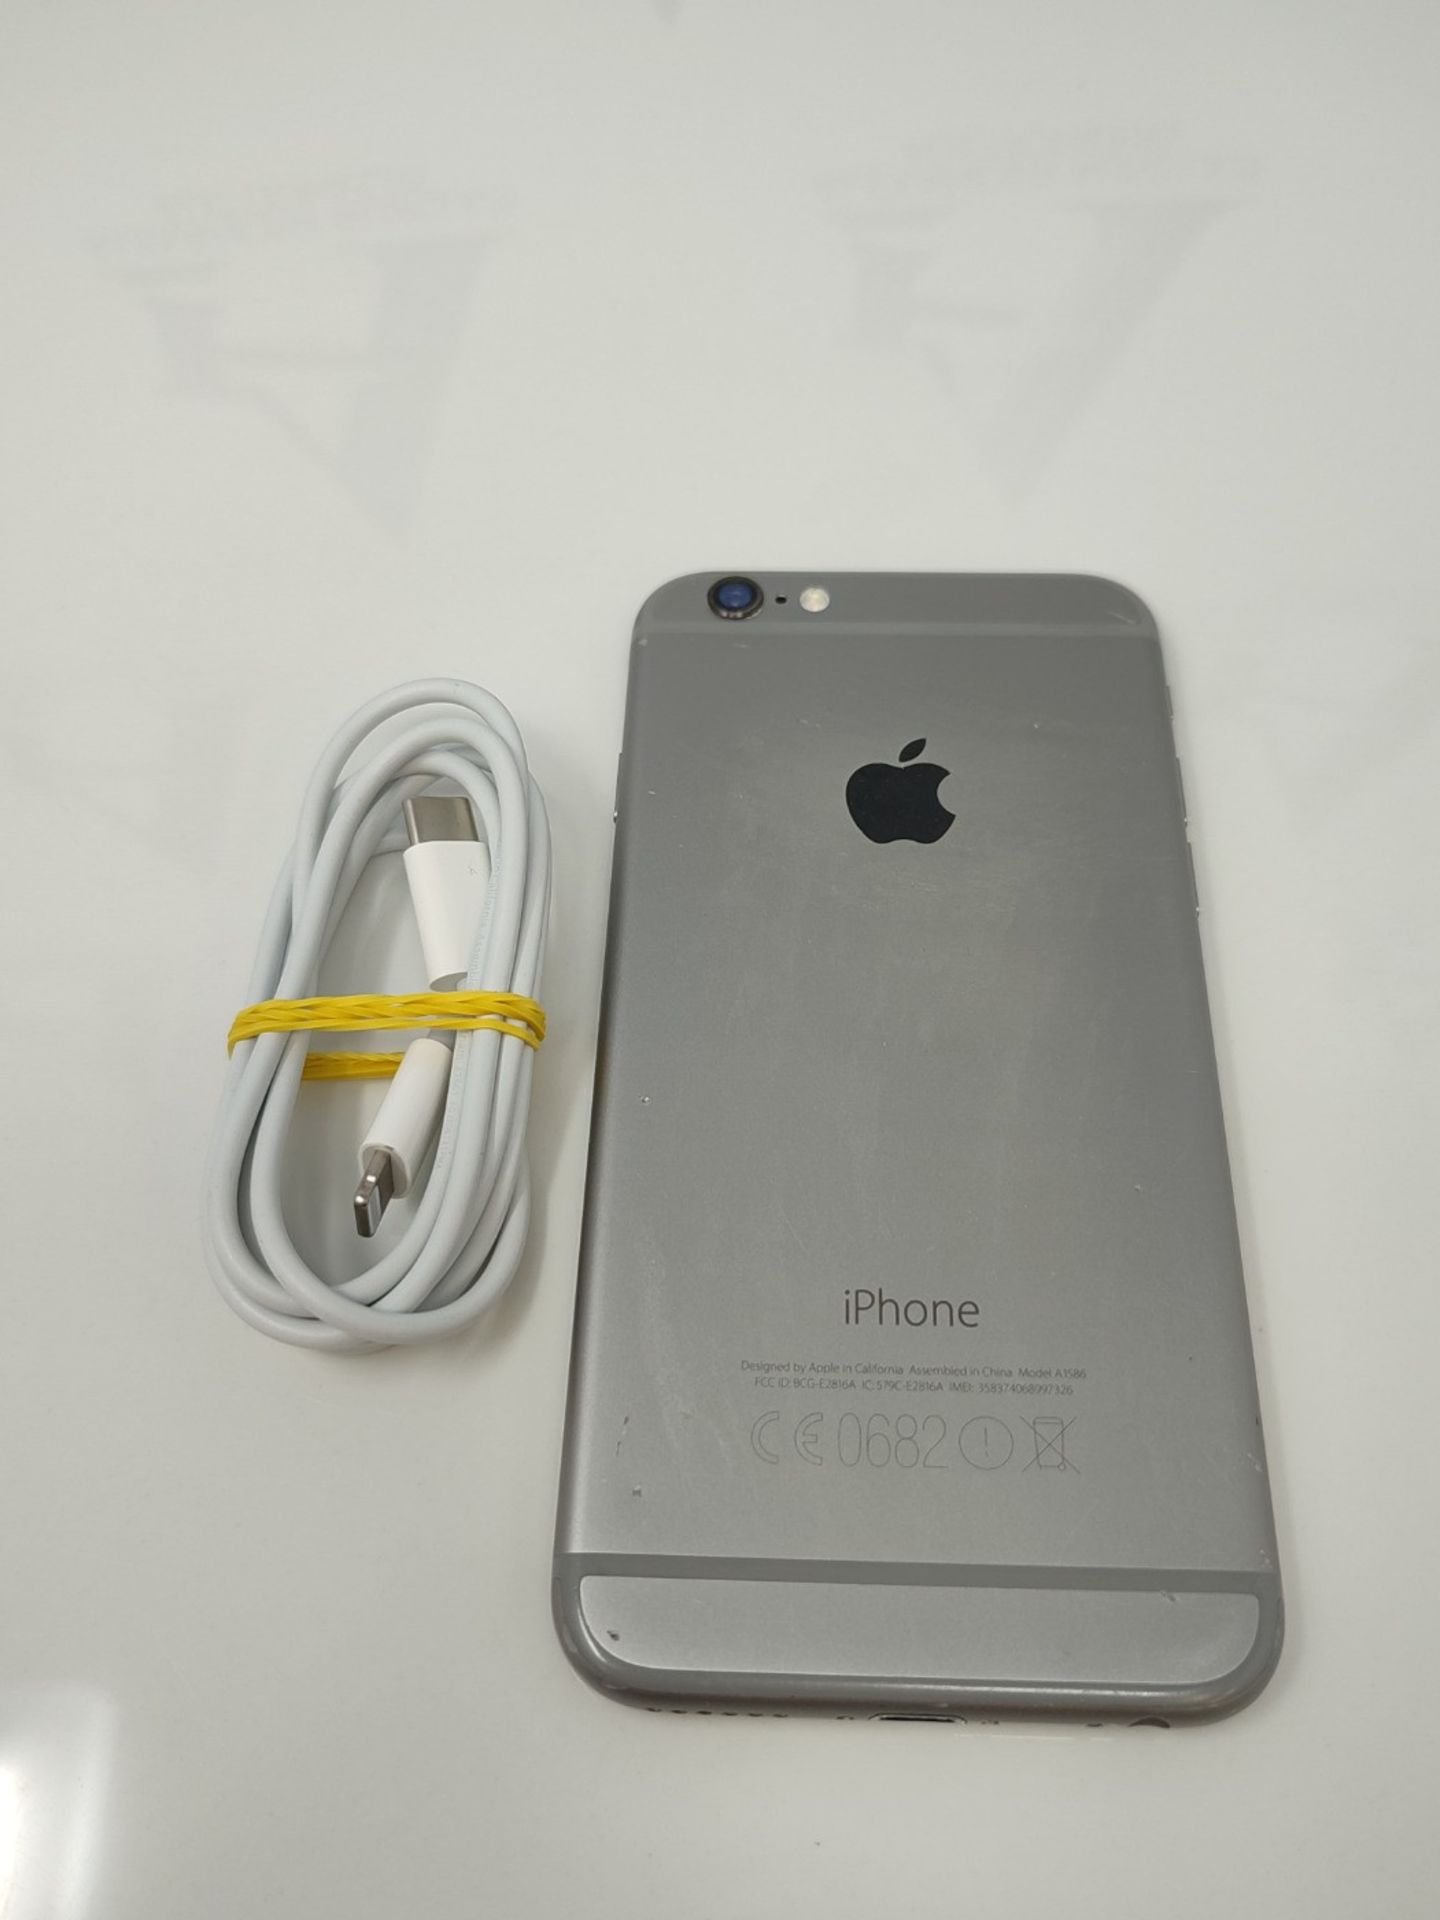 iPhone 6, 16GB, Gray - Image 2 of 2